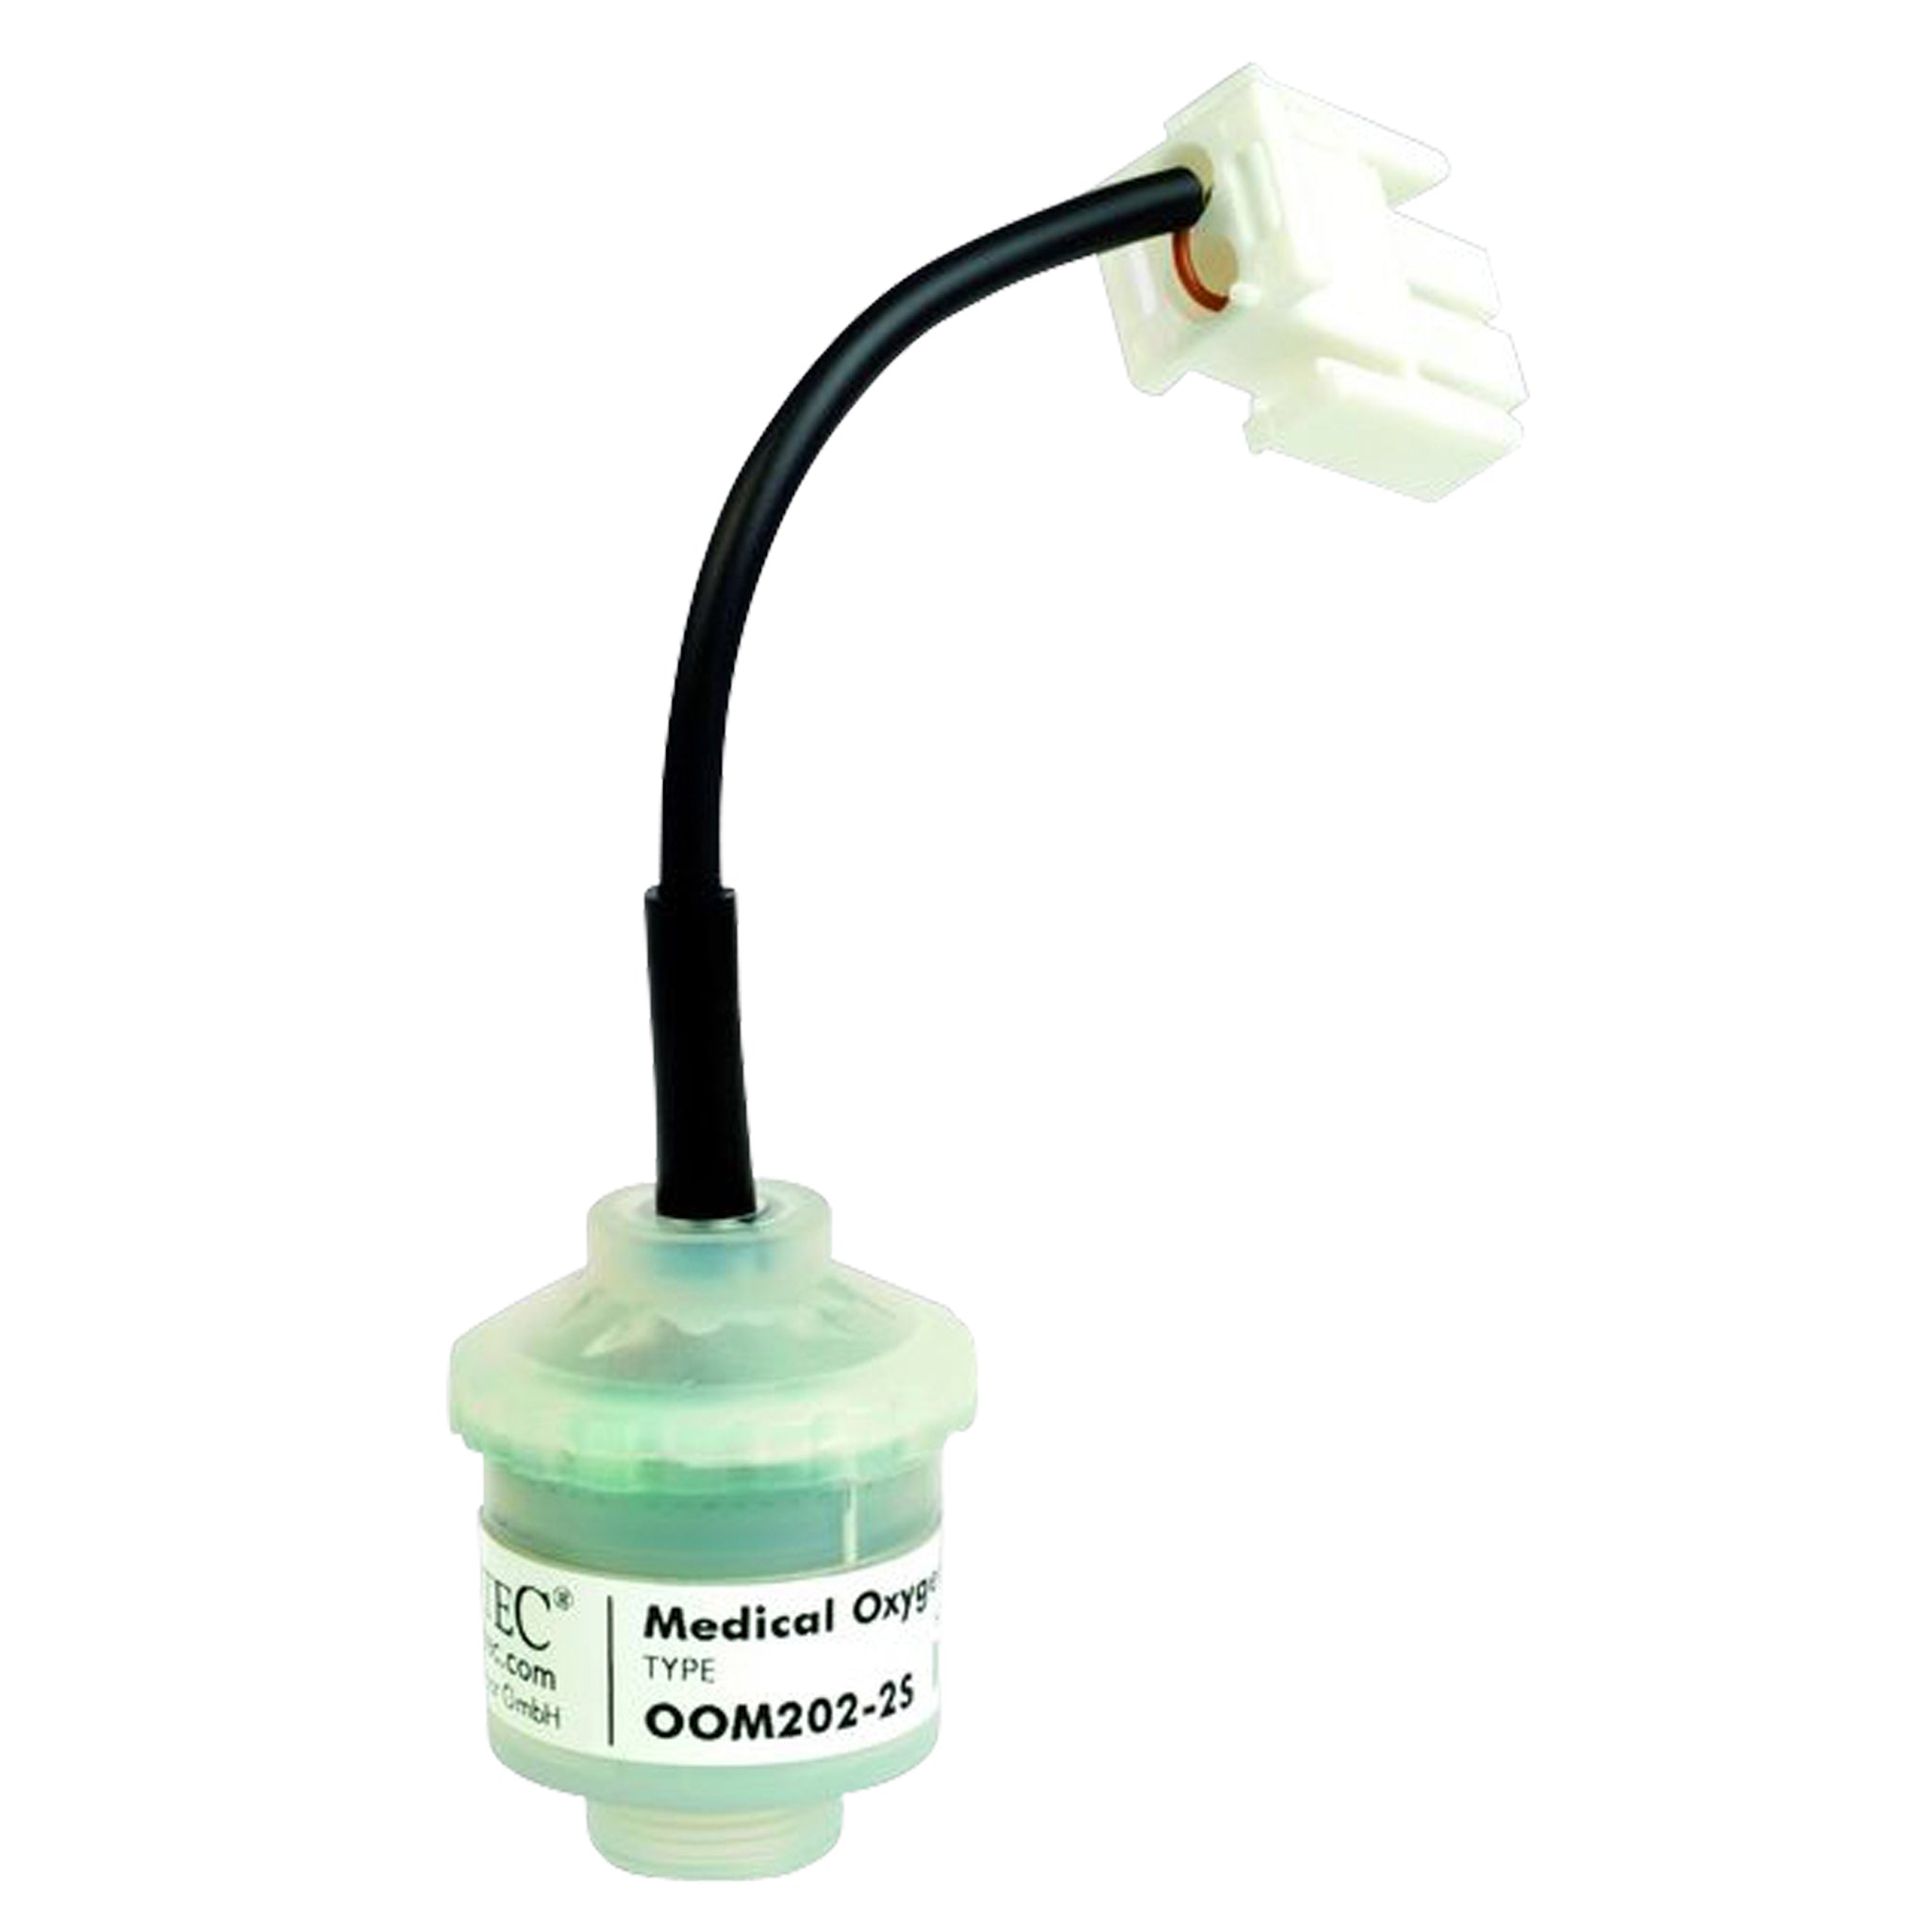 Envitec OOMLF202-2S Lead-free Oxygen Sensor